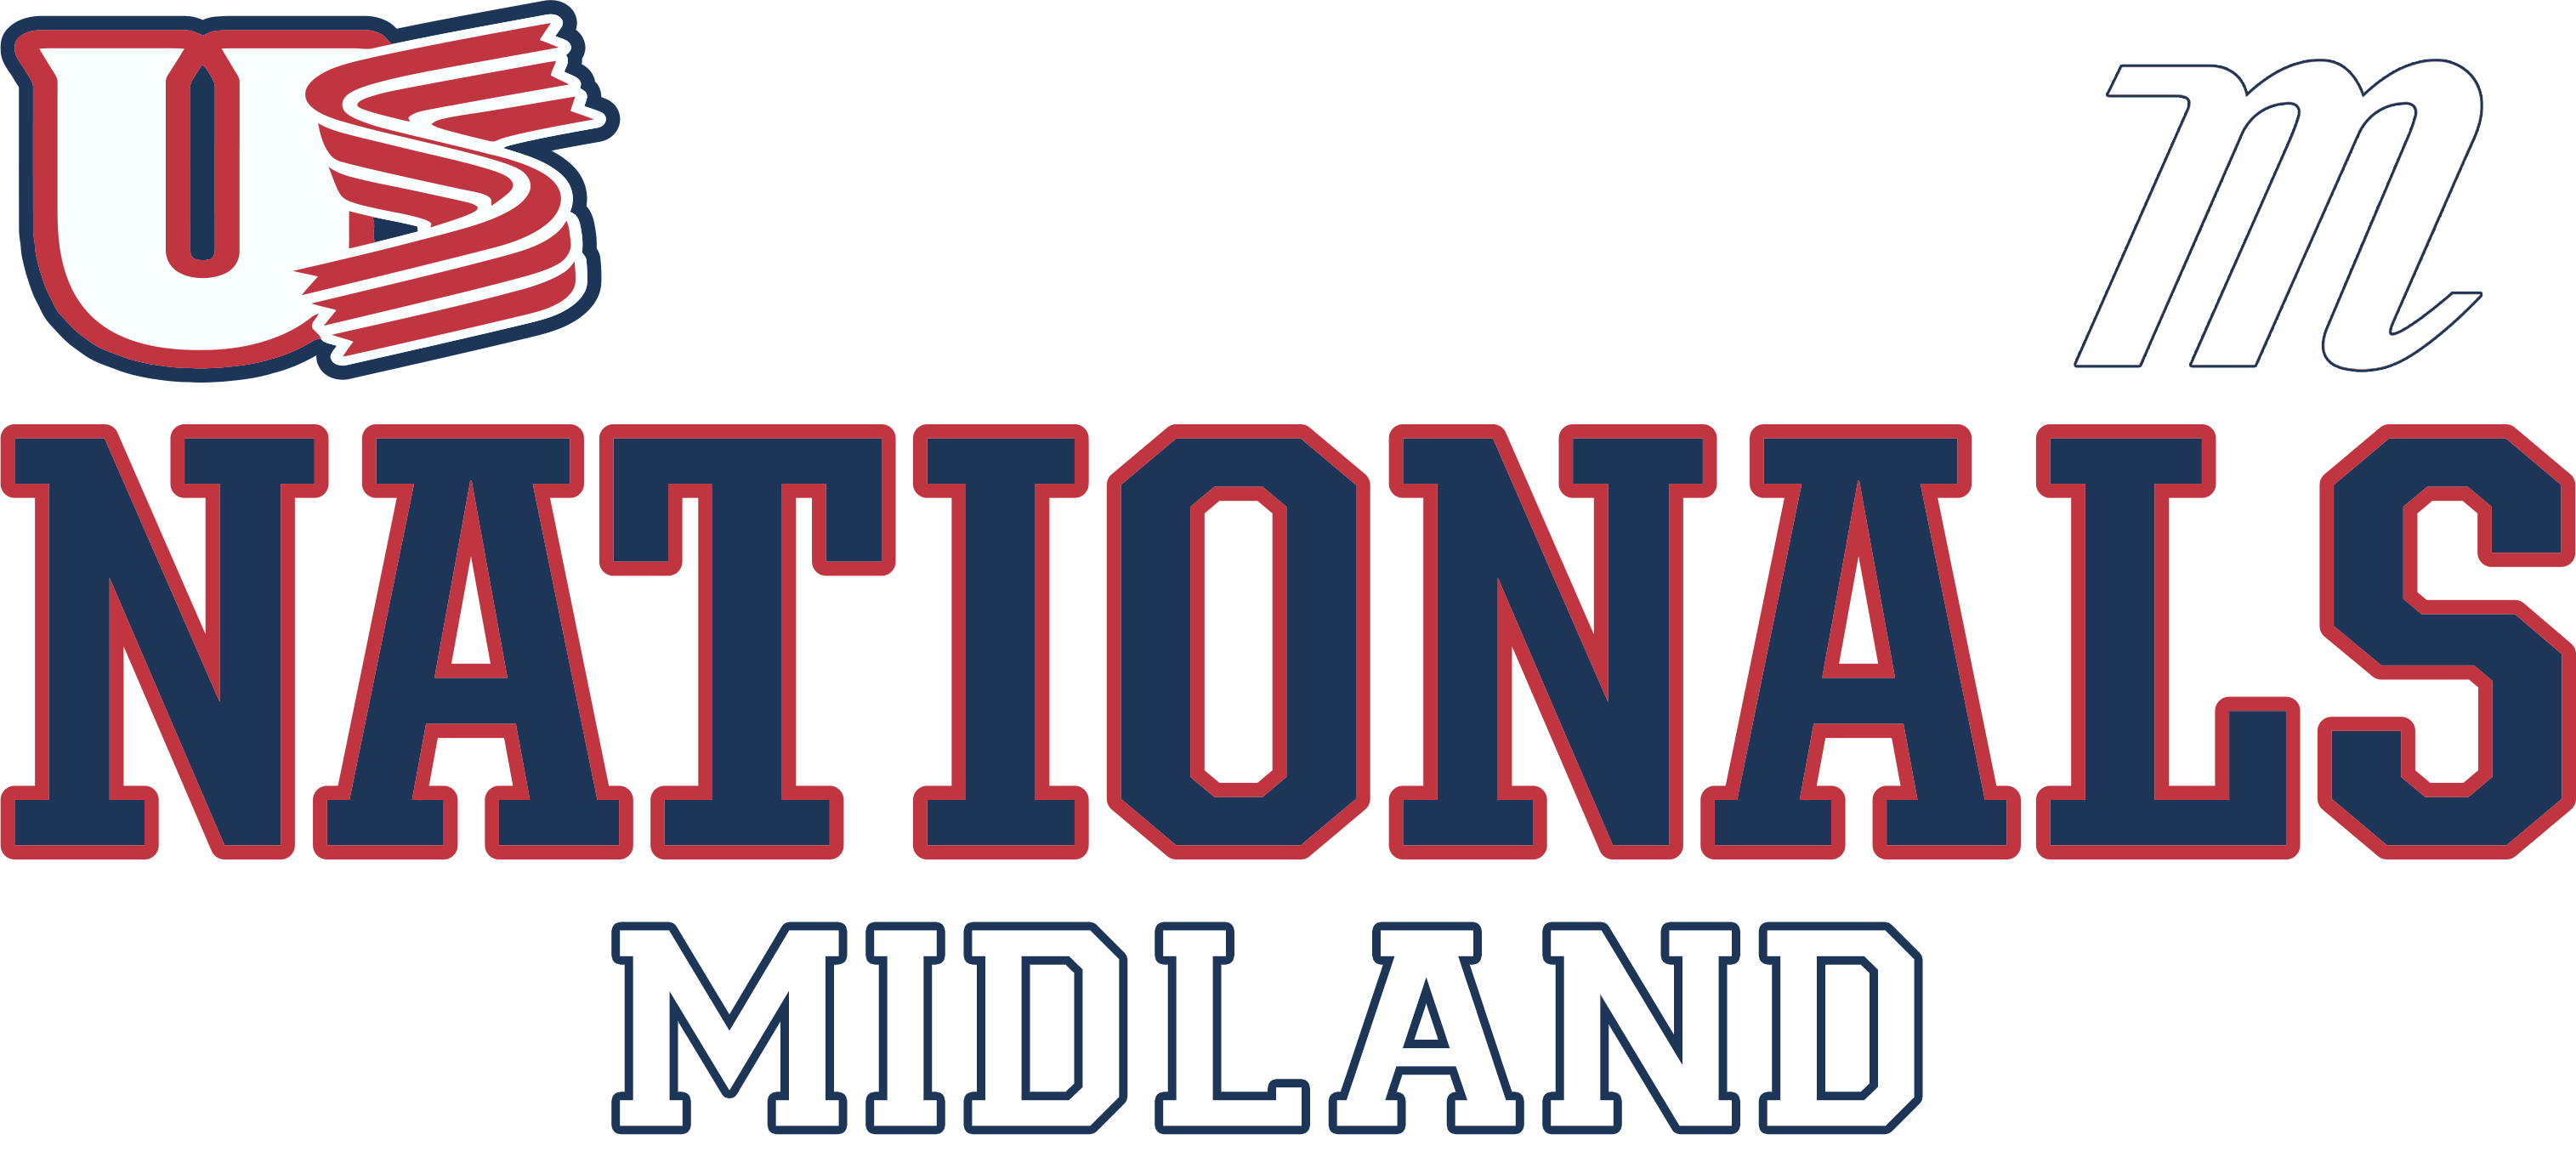 US Nationals Midland Baseball Club